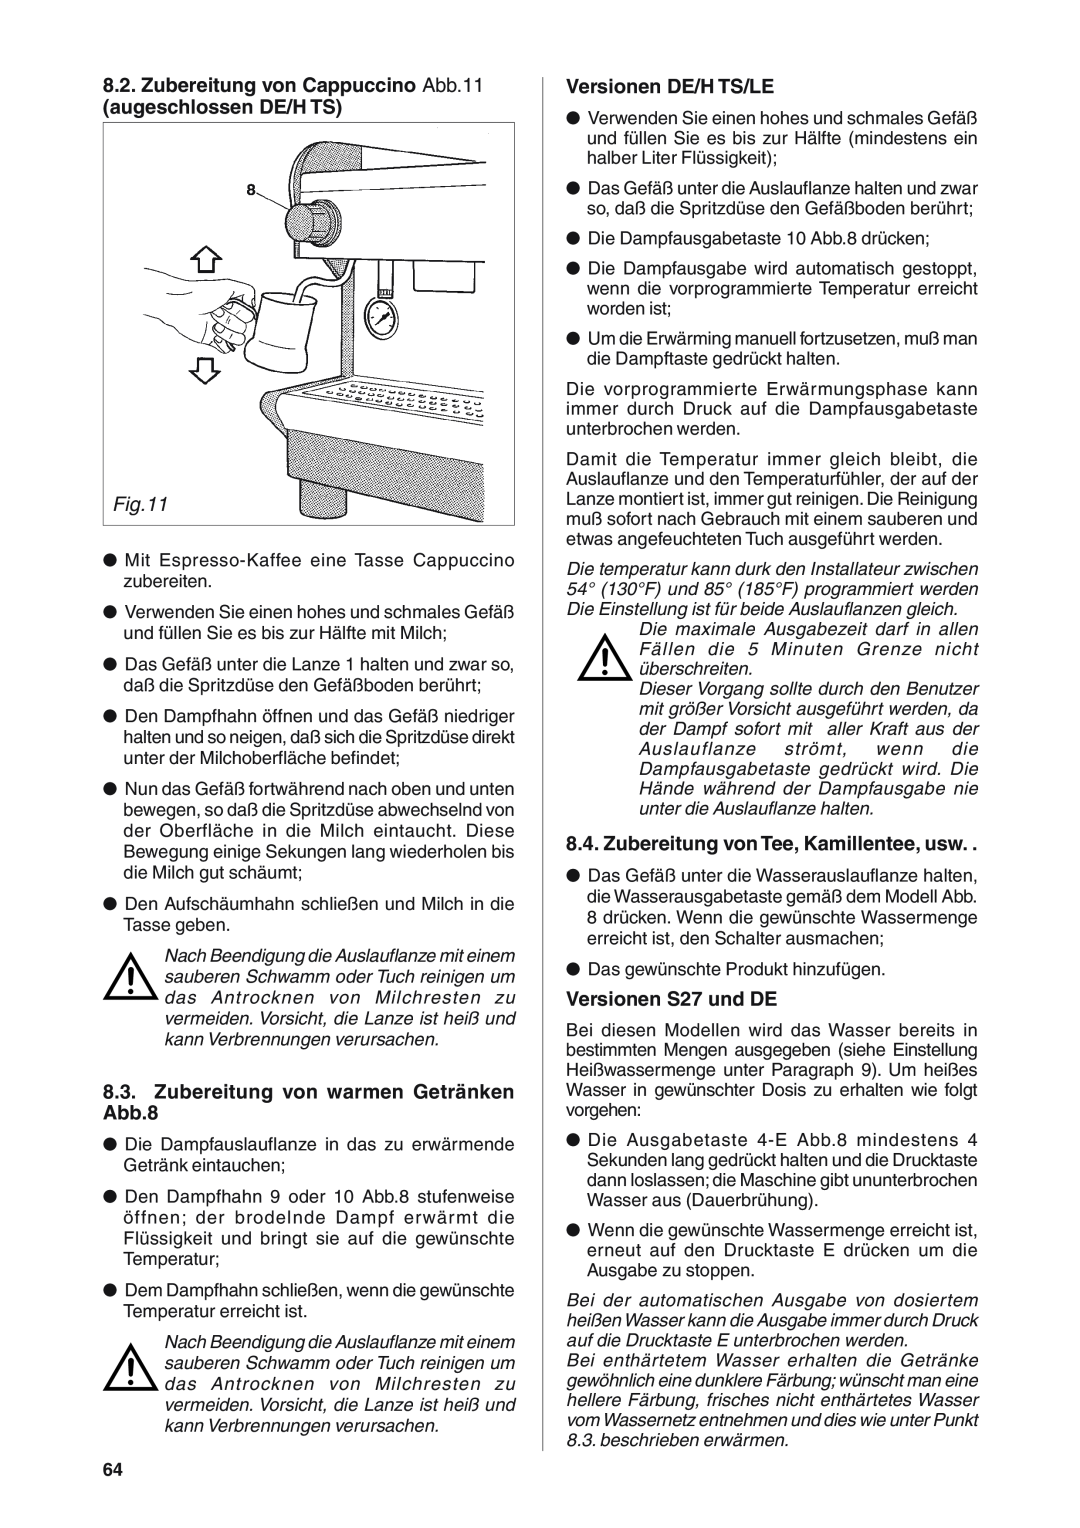 Rancilio S20 manual Zubereitung von Cappuccino Abb.11 augeschlossen DE/H TS, Zubereitung von warmen Getränken Abb.8 